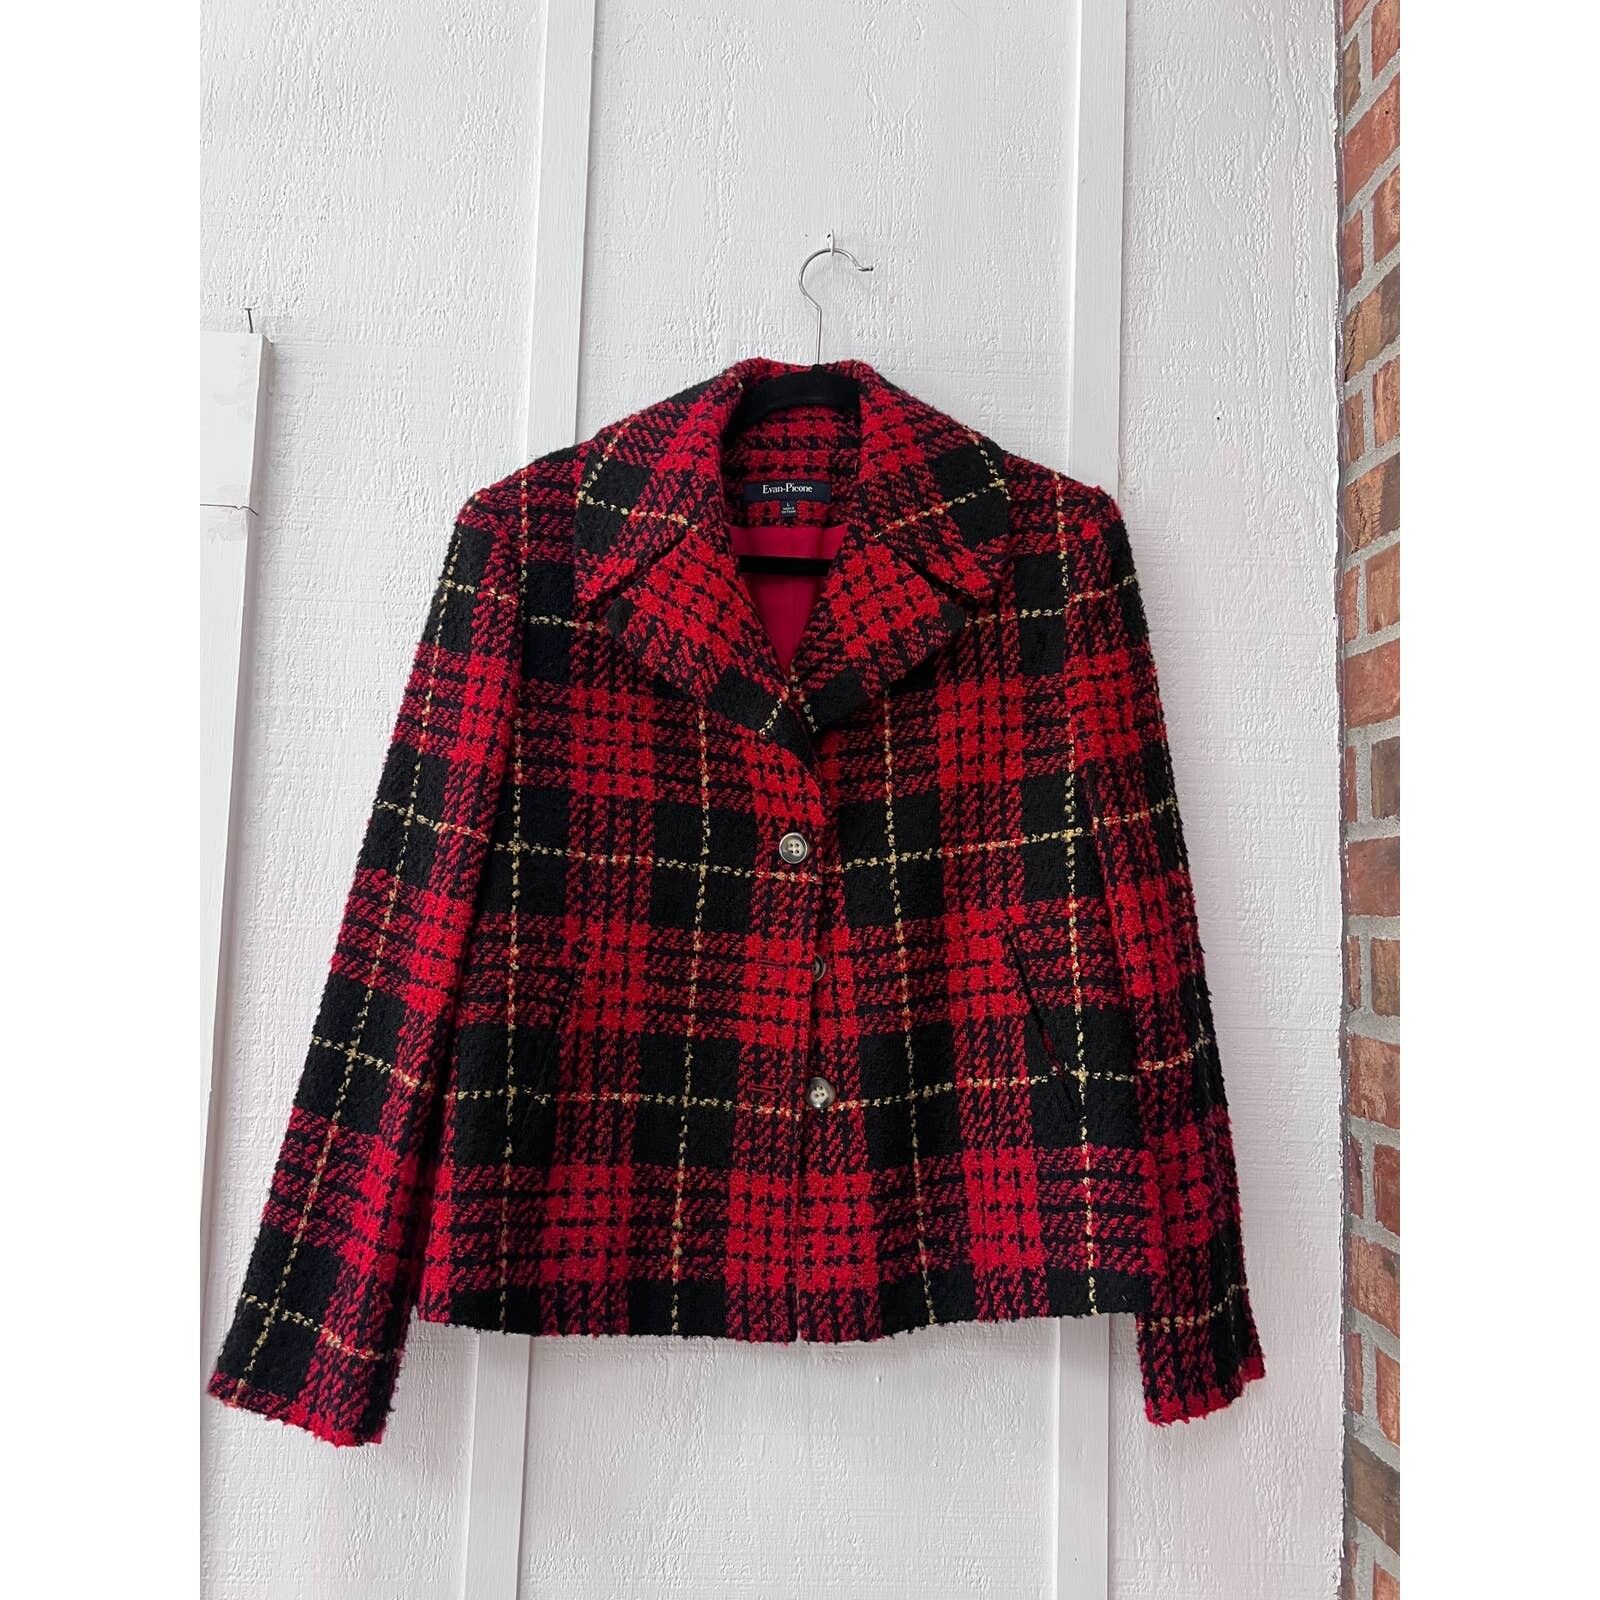 cheap purchase UK Vintage Evan Picone Jacket, red plaid